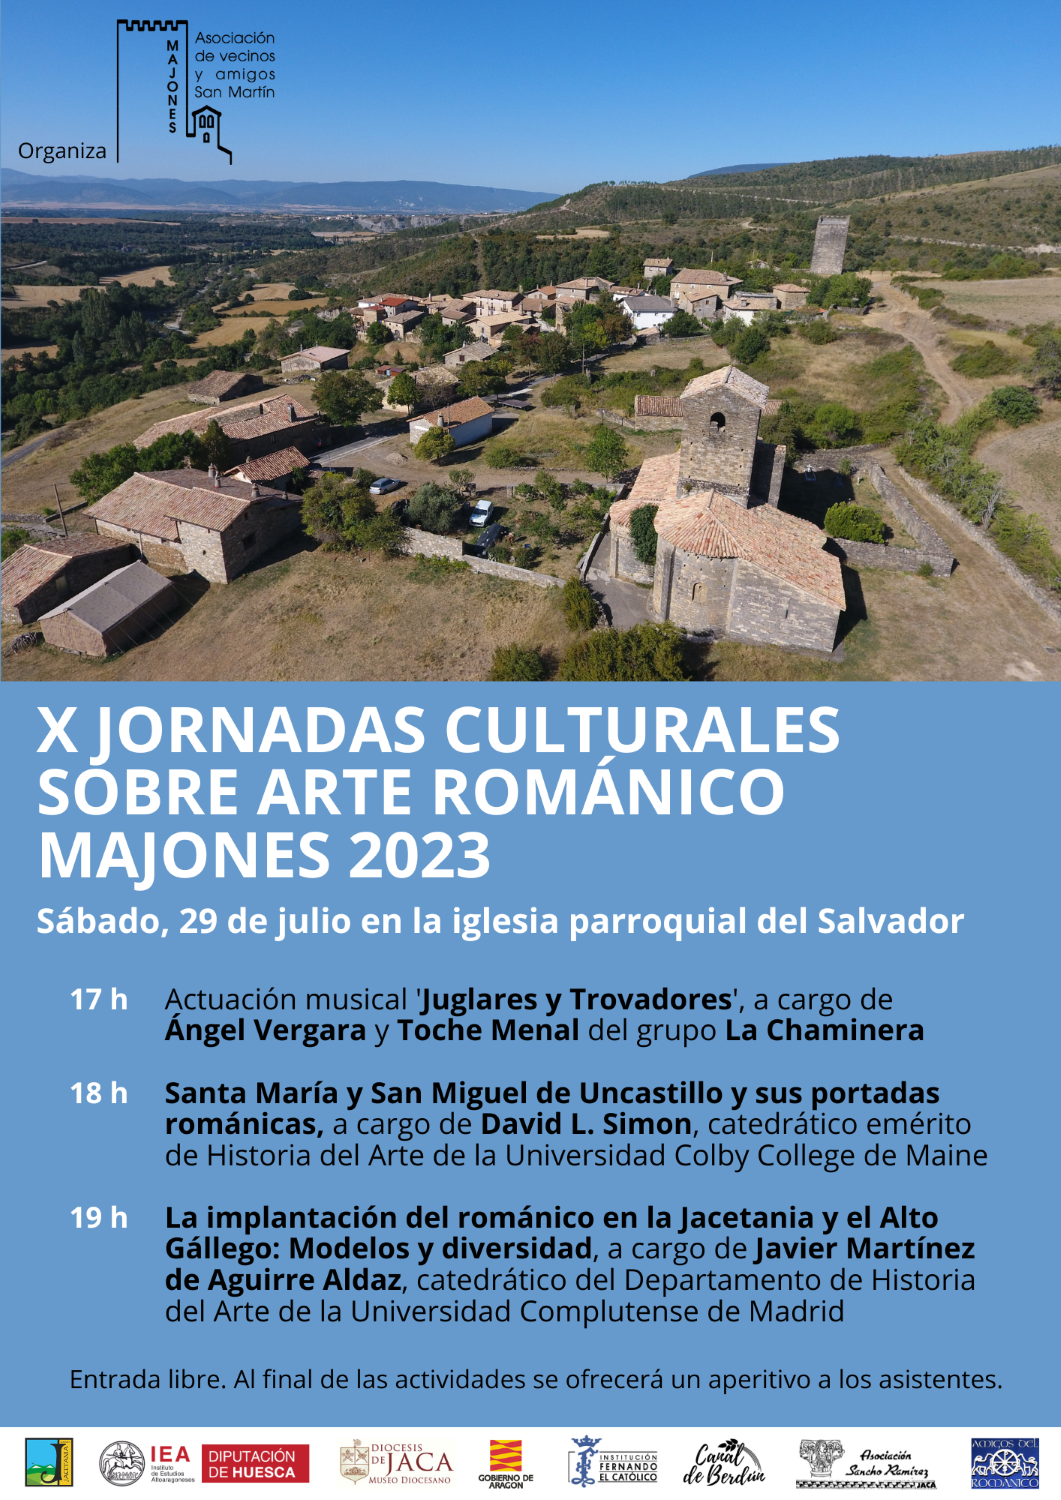 X Jornadas Culturales sobre Arte Romnico Majones 2023